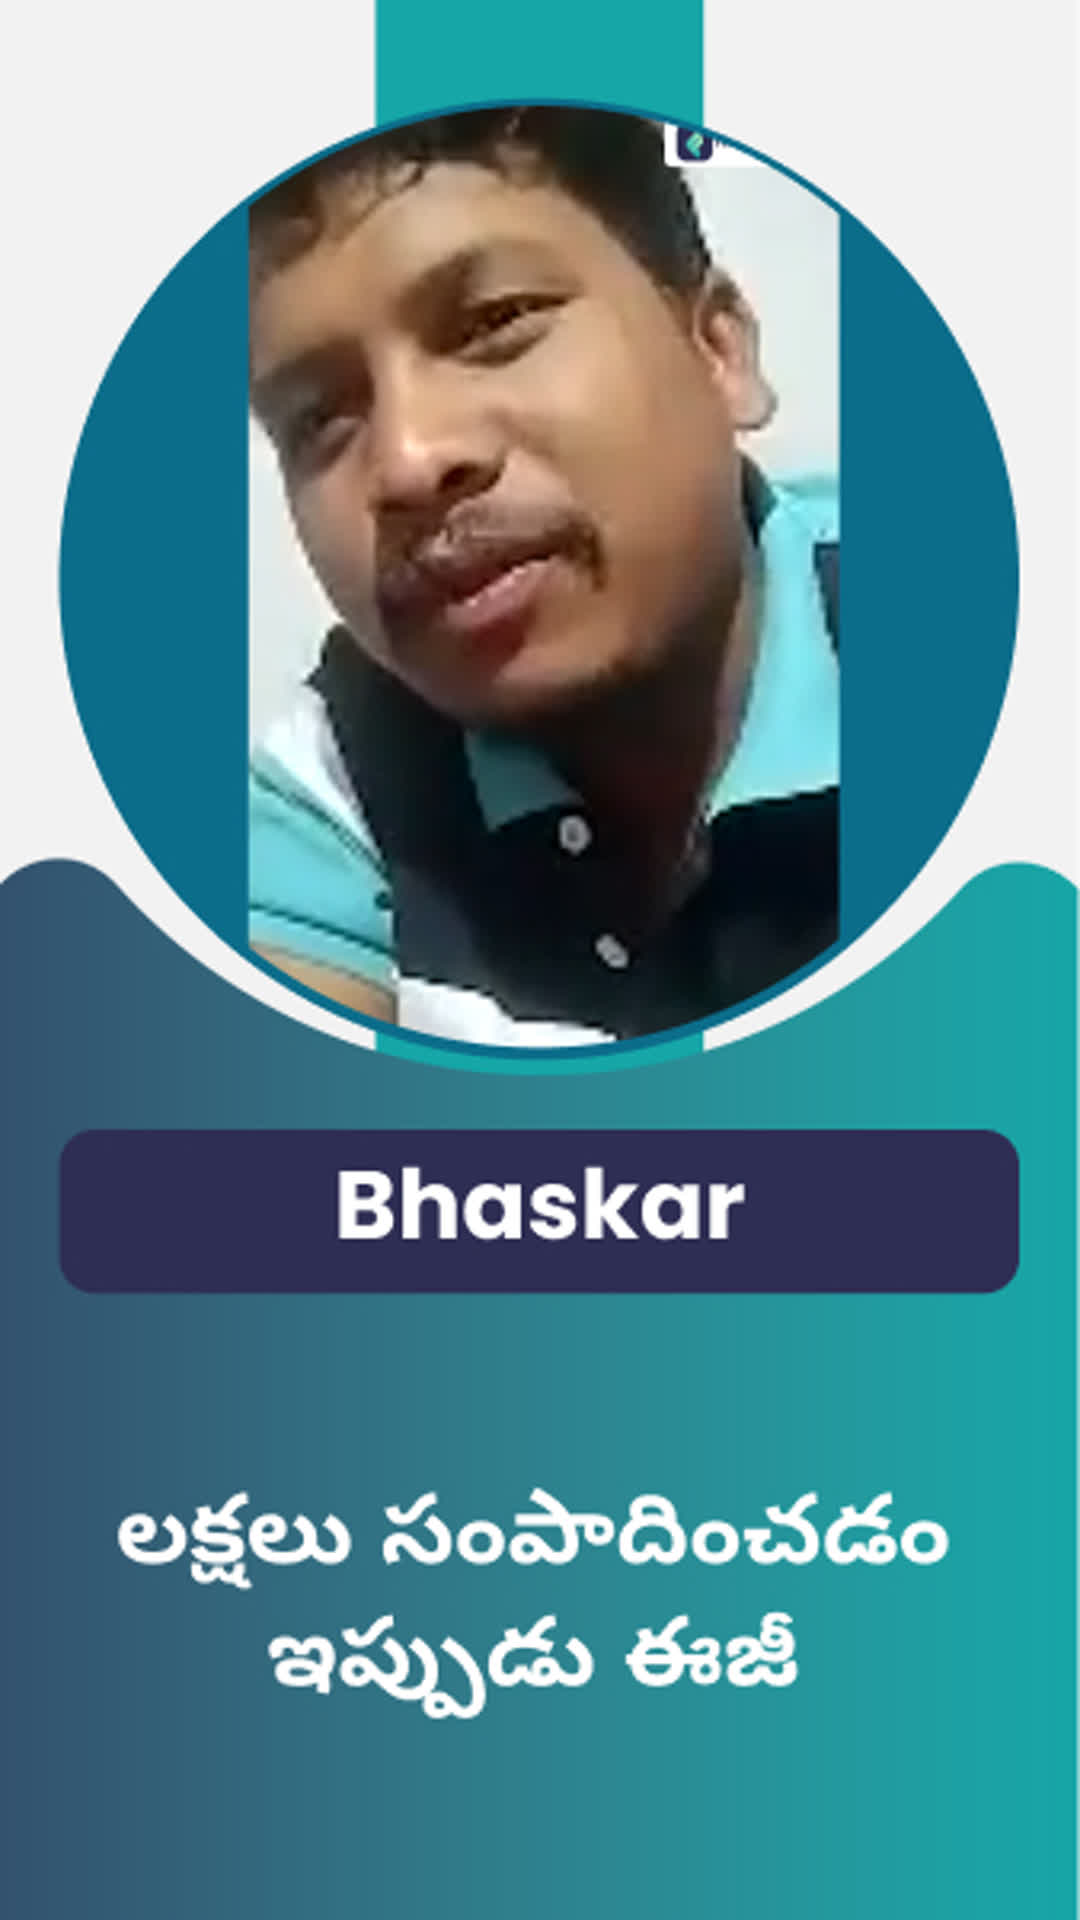 Bhaskar's Honest Review of ffreedom app - Visakhapatnam ,Andhra Pradesh